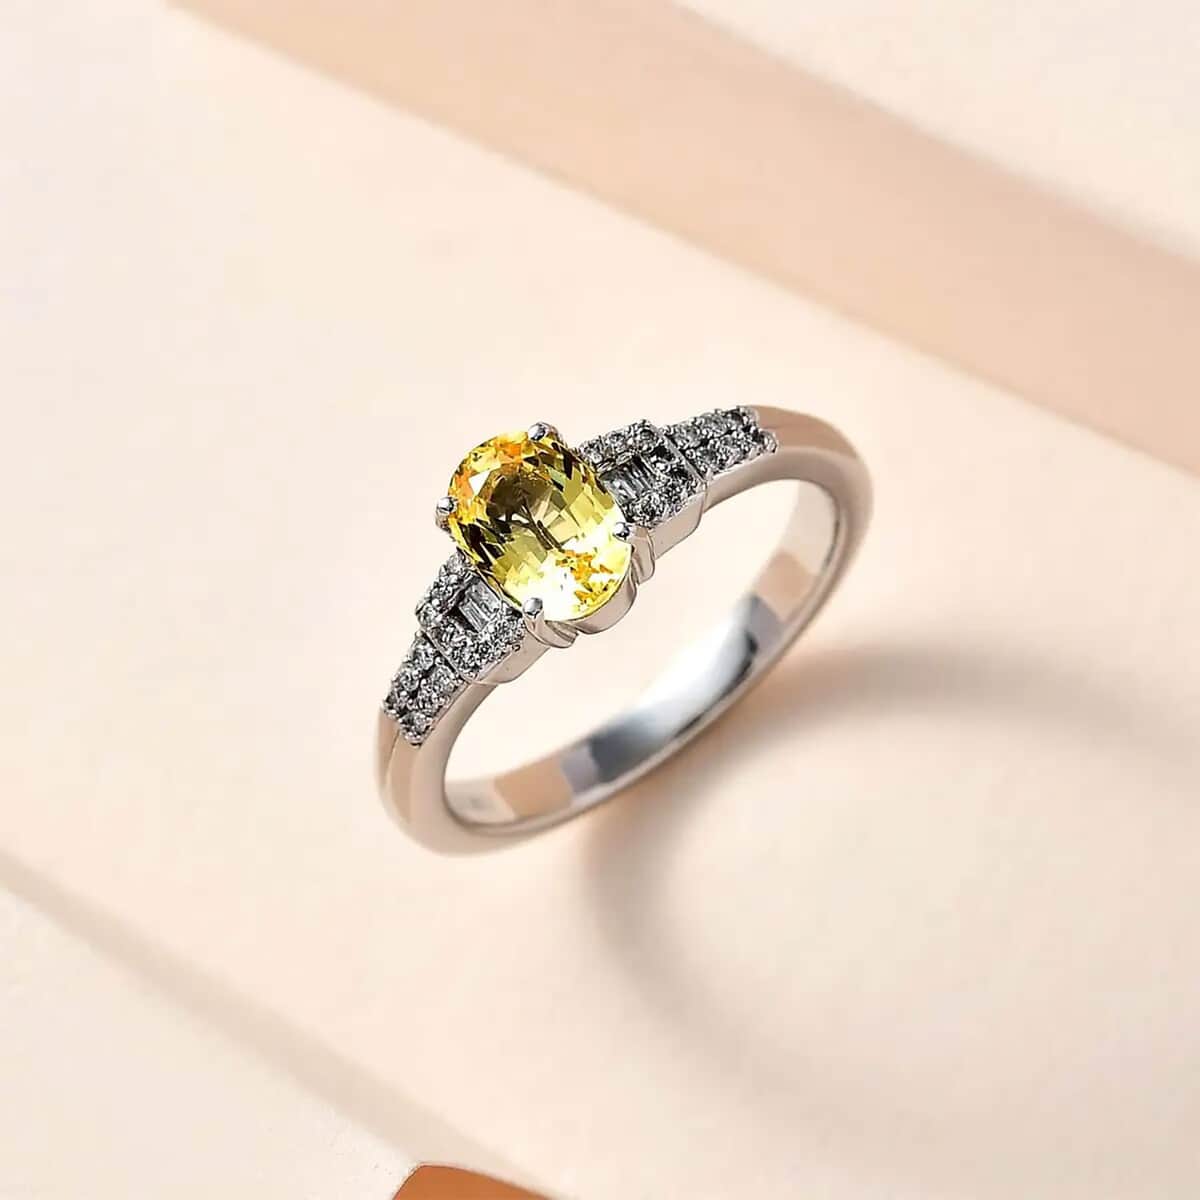 Luxoro 10K White Gold Premium Natural Ceylon Yellow Sapphire and G-H I2 Diamond Ring (Size 7.0) 1.35 ctw image number 1